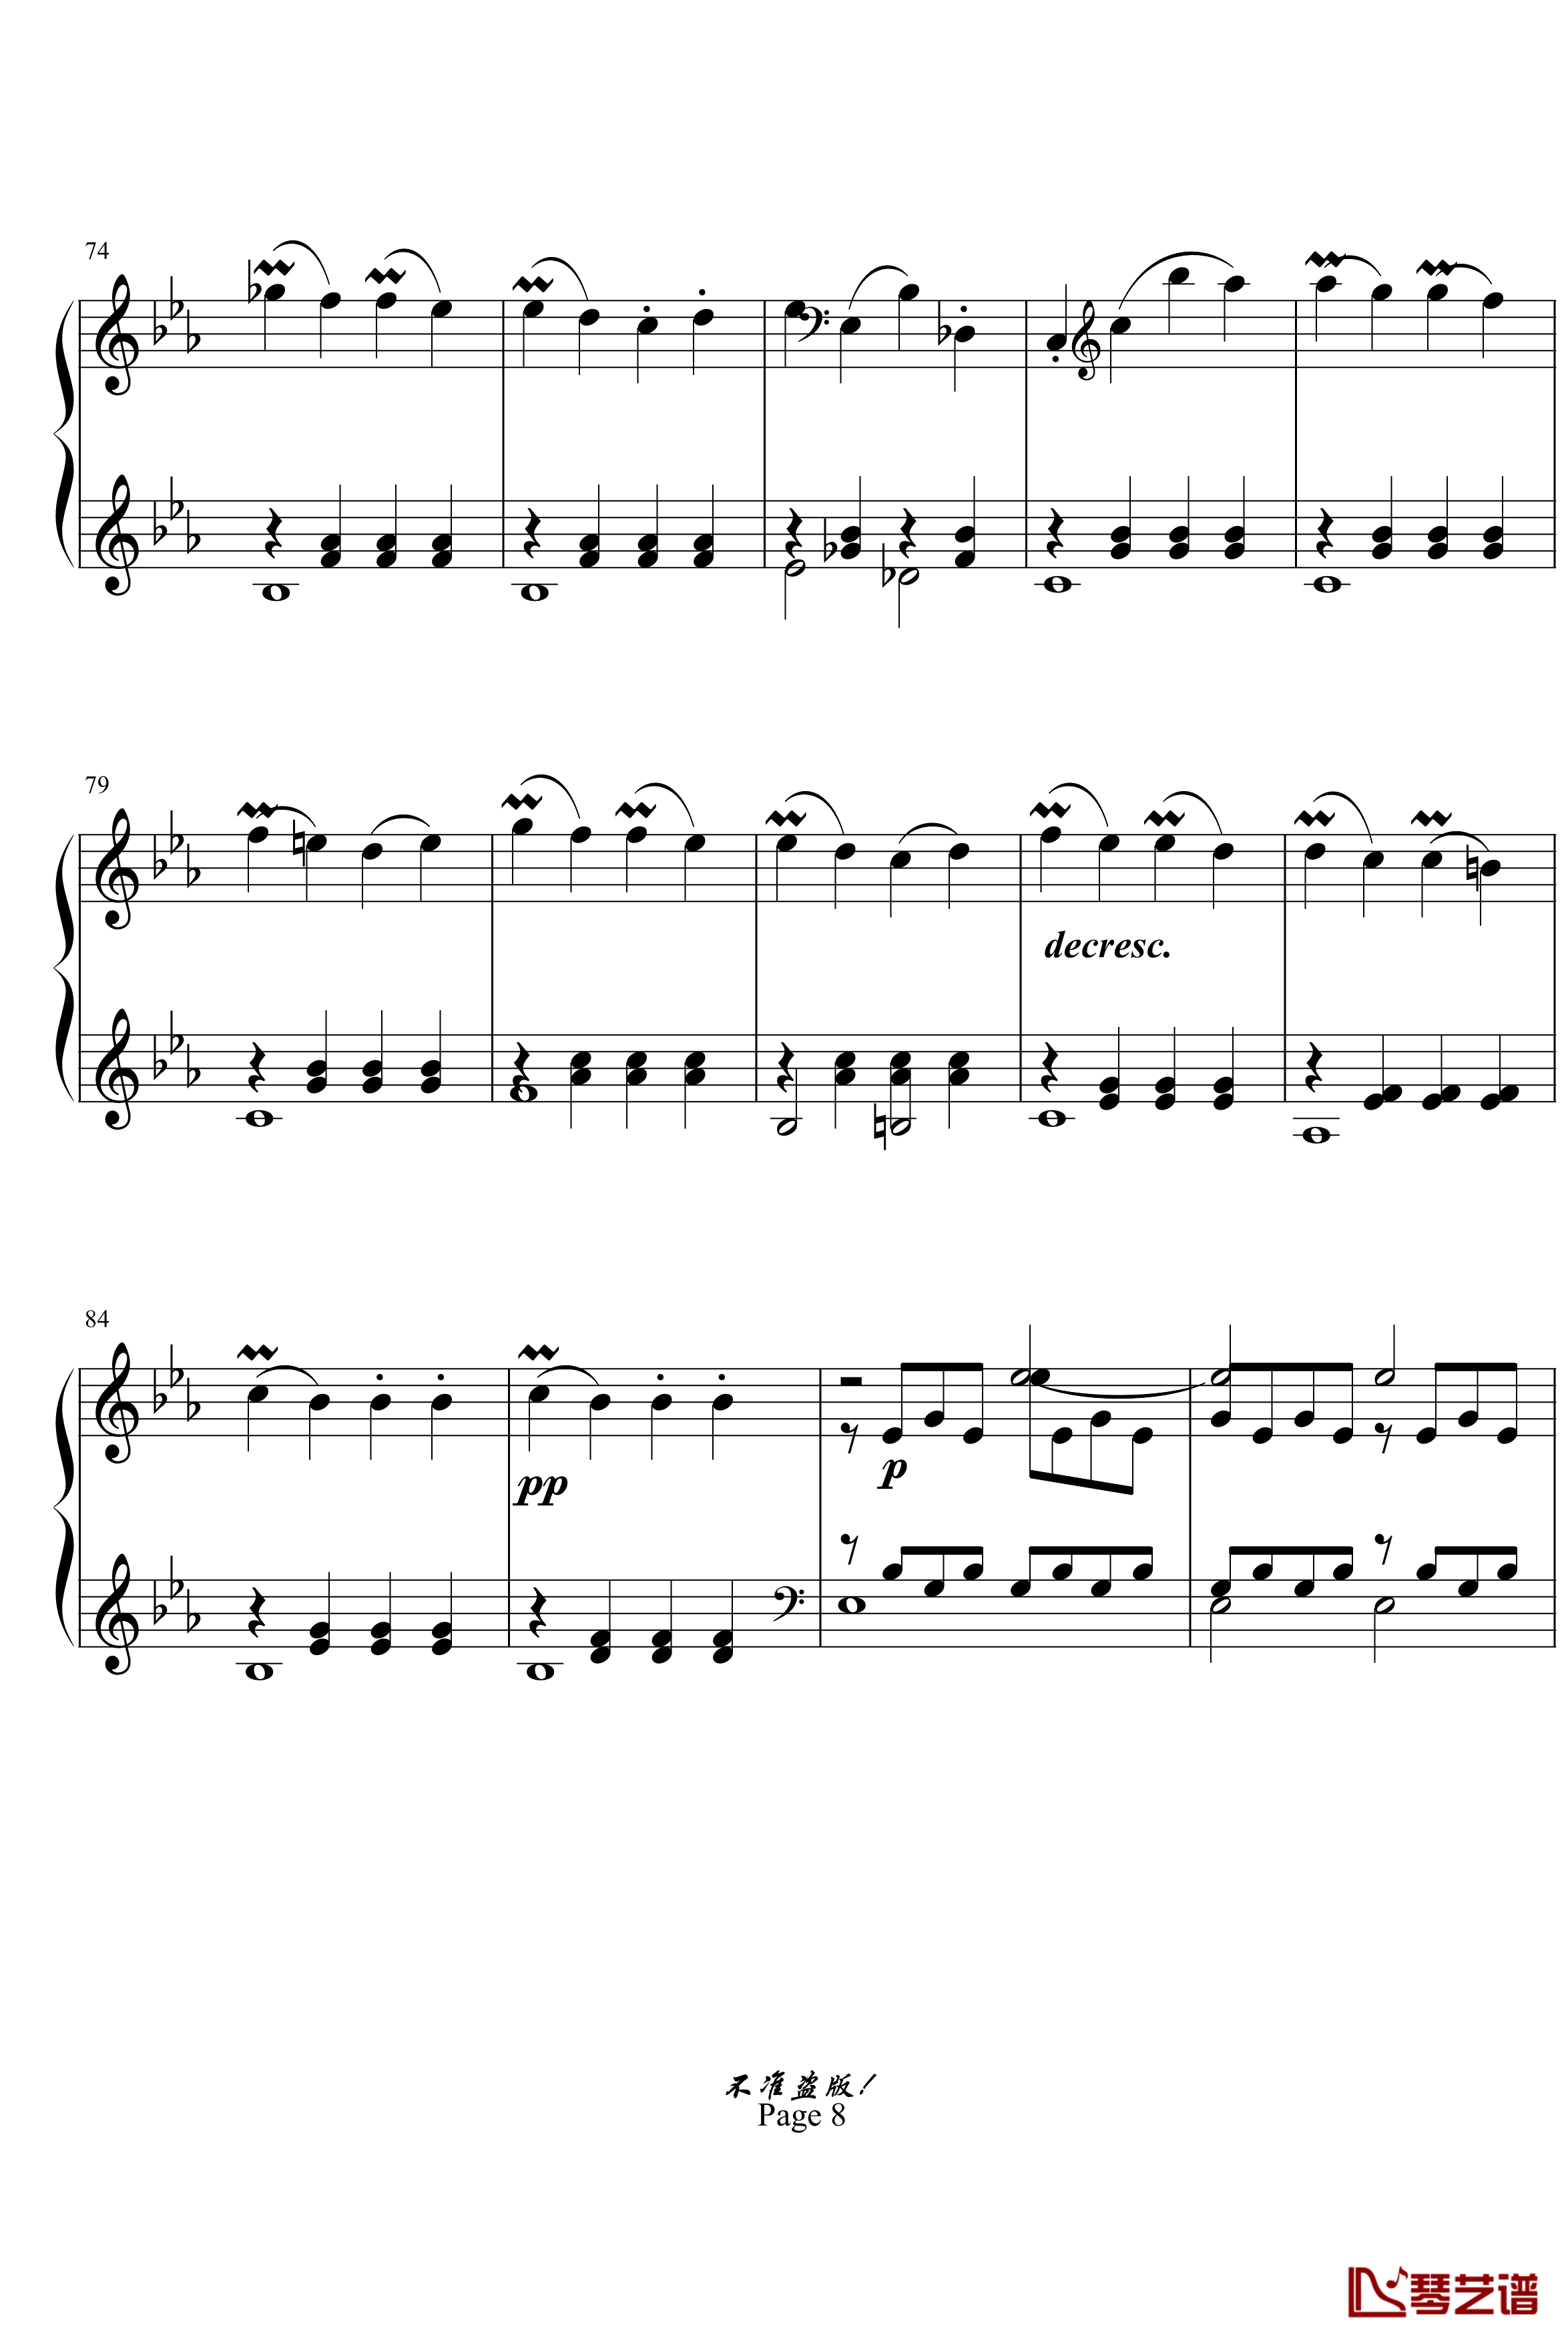 c小调第八钢琴奏鸣曲钢琴谱-悲怆第一乐章-beethoven-贝多芬8